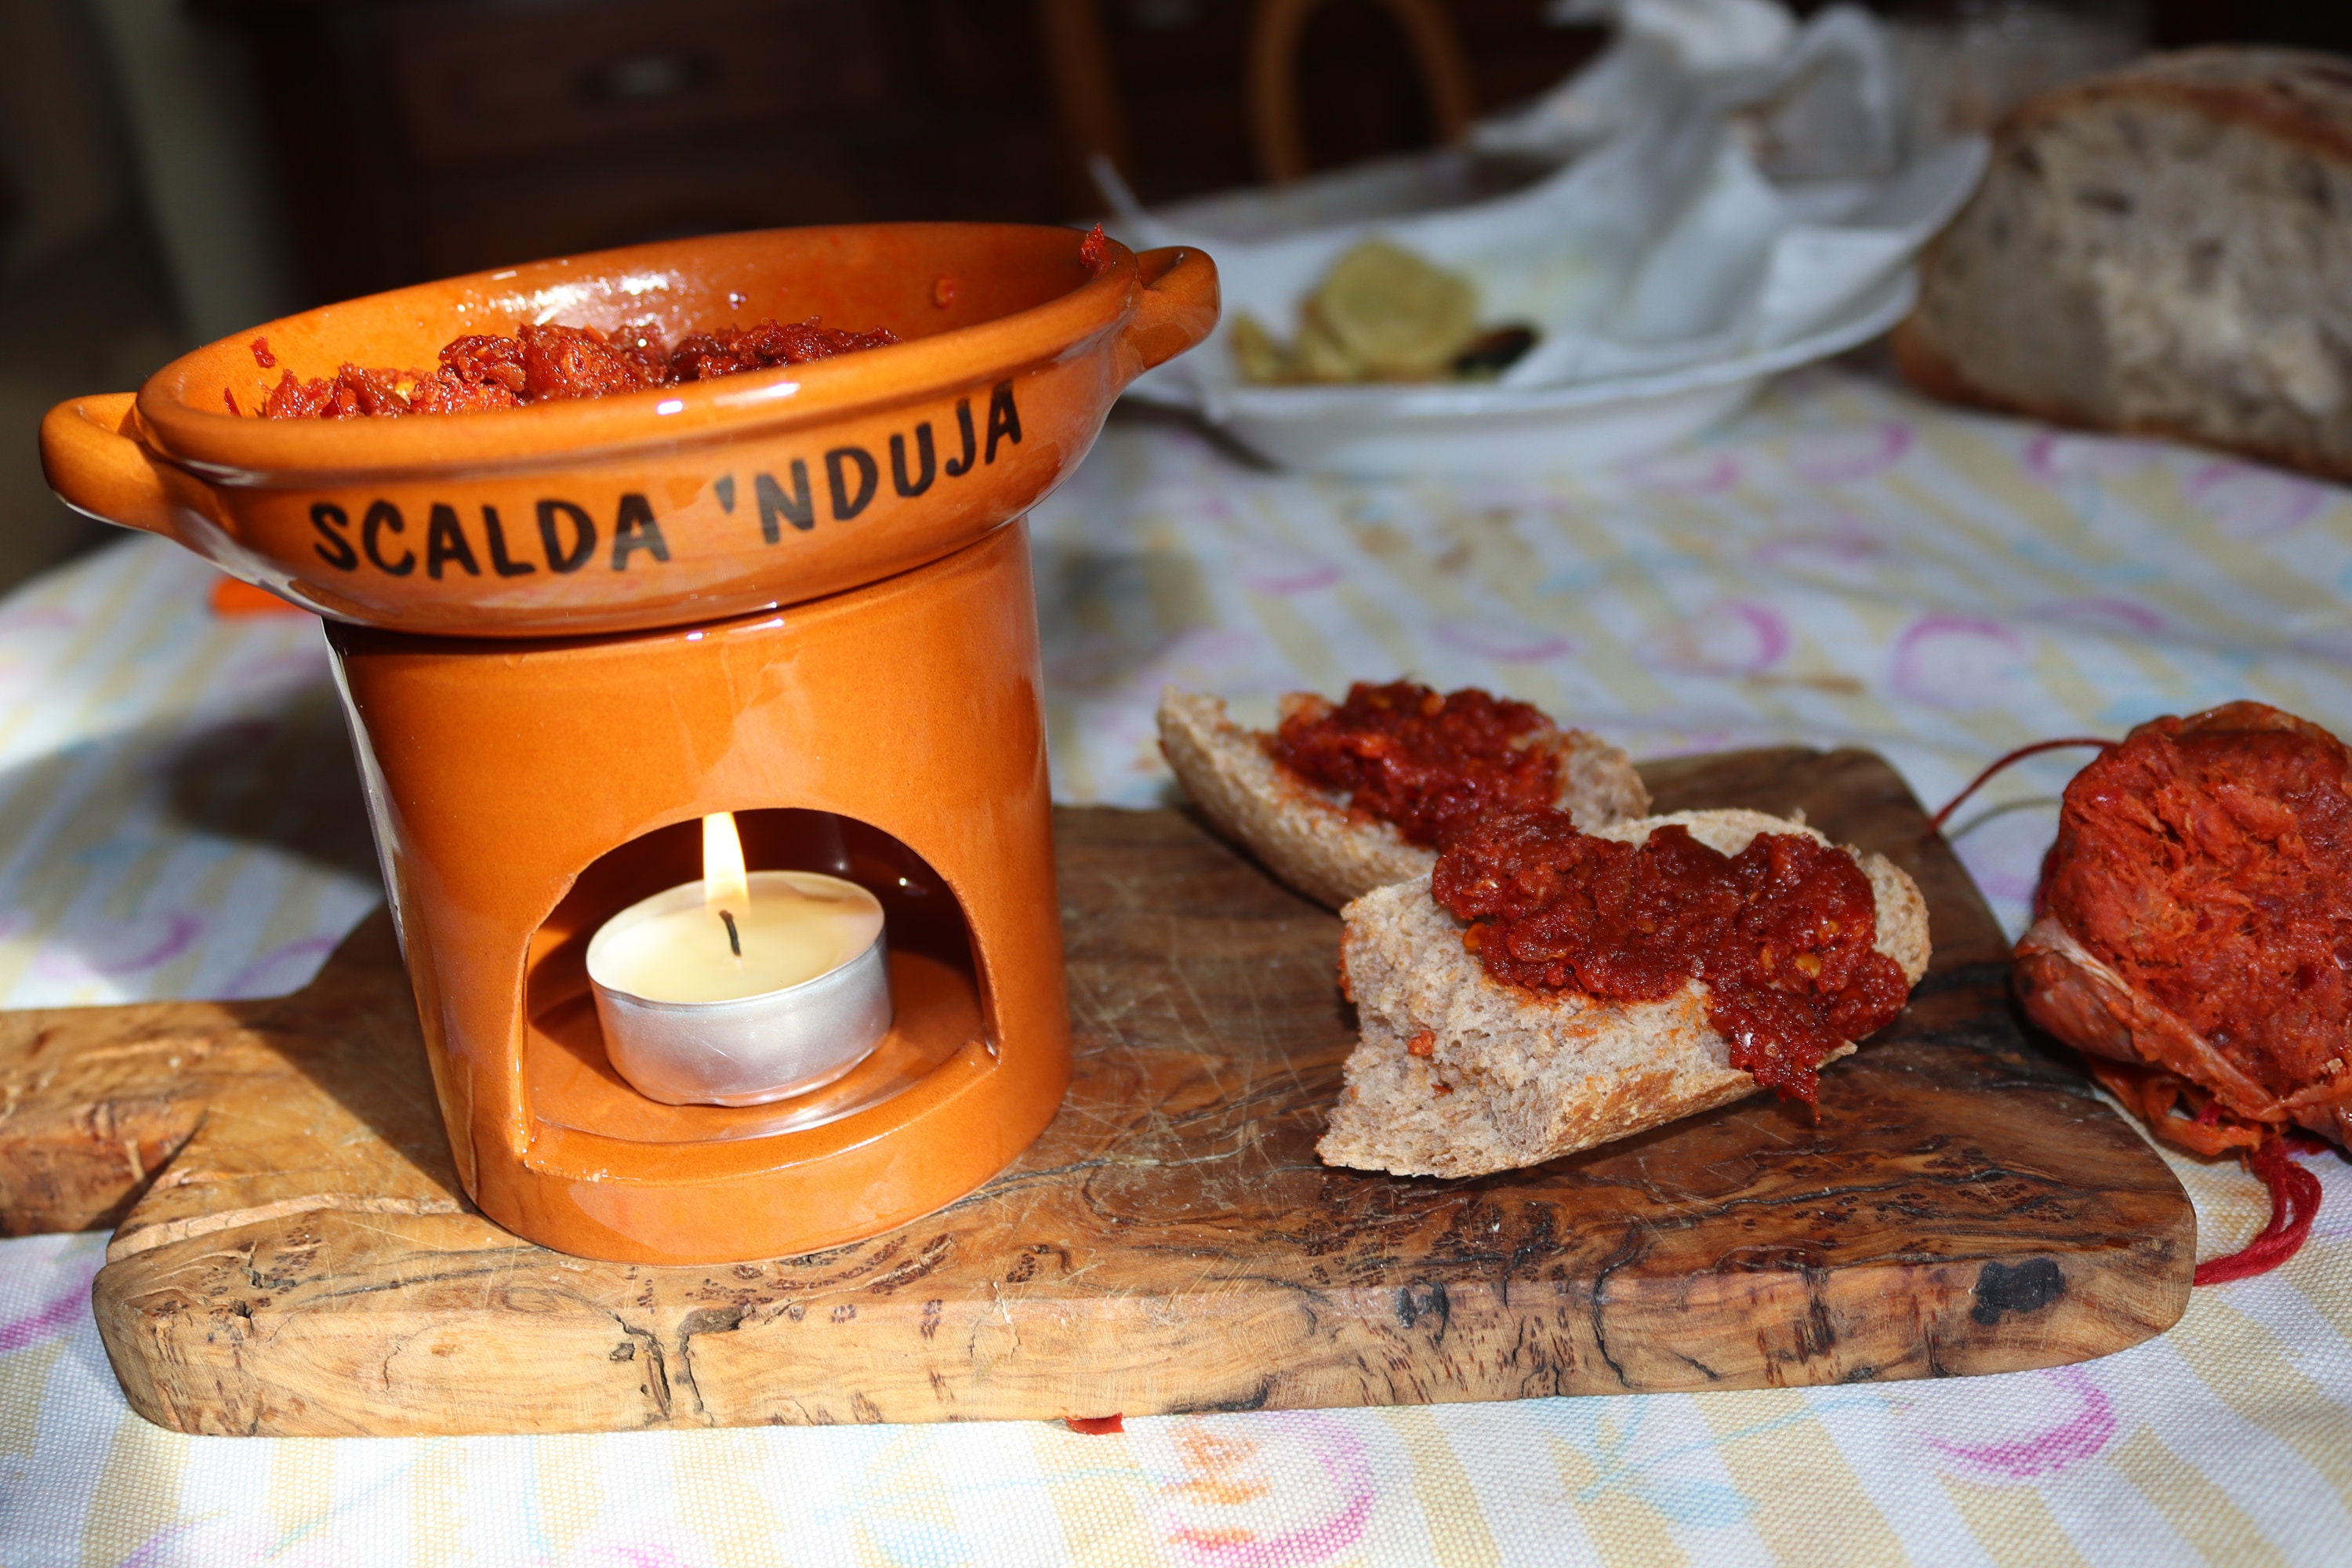 Scalda 'nduja scaldanduja in terracotta - Handicraft objects - La Calabrese